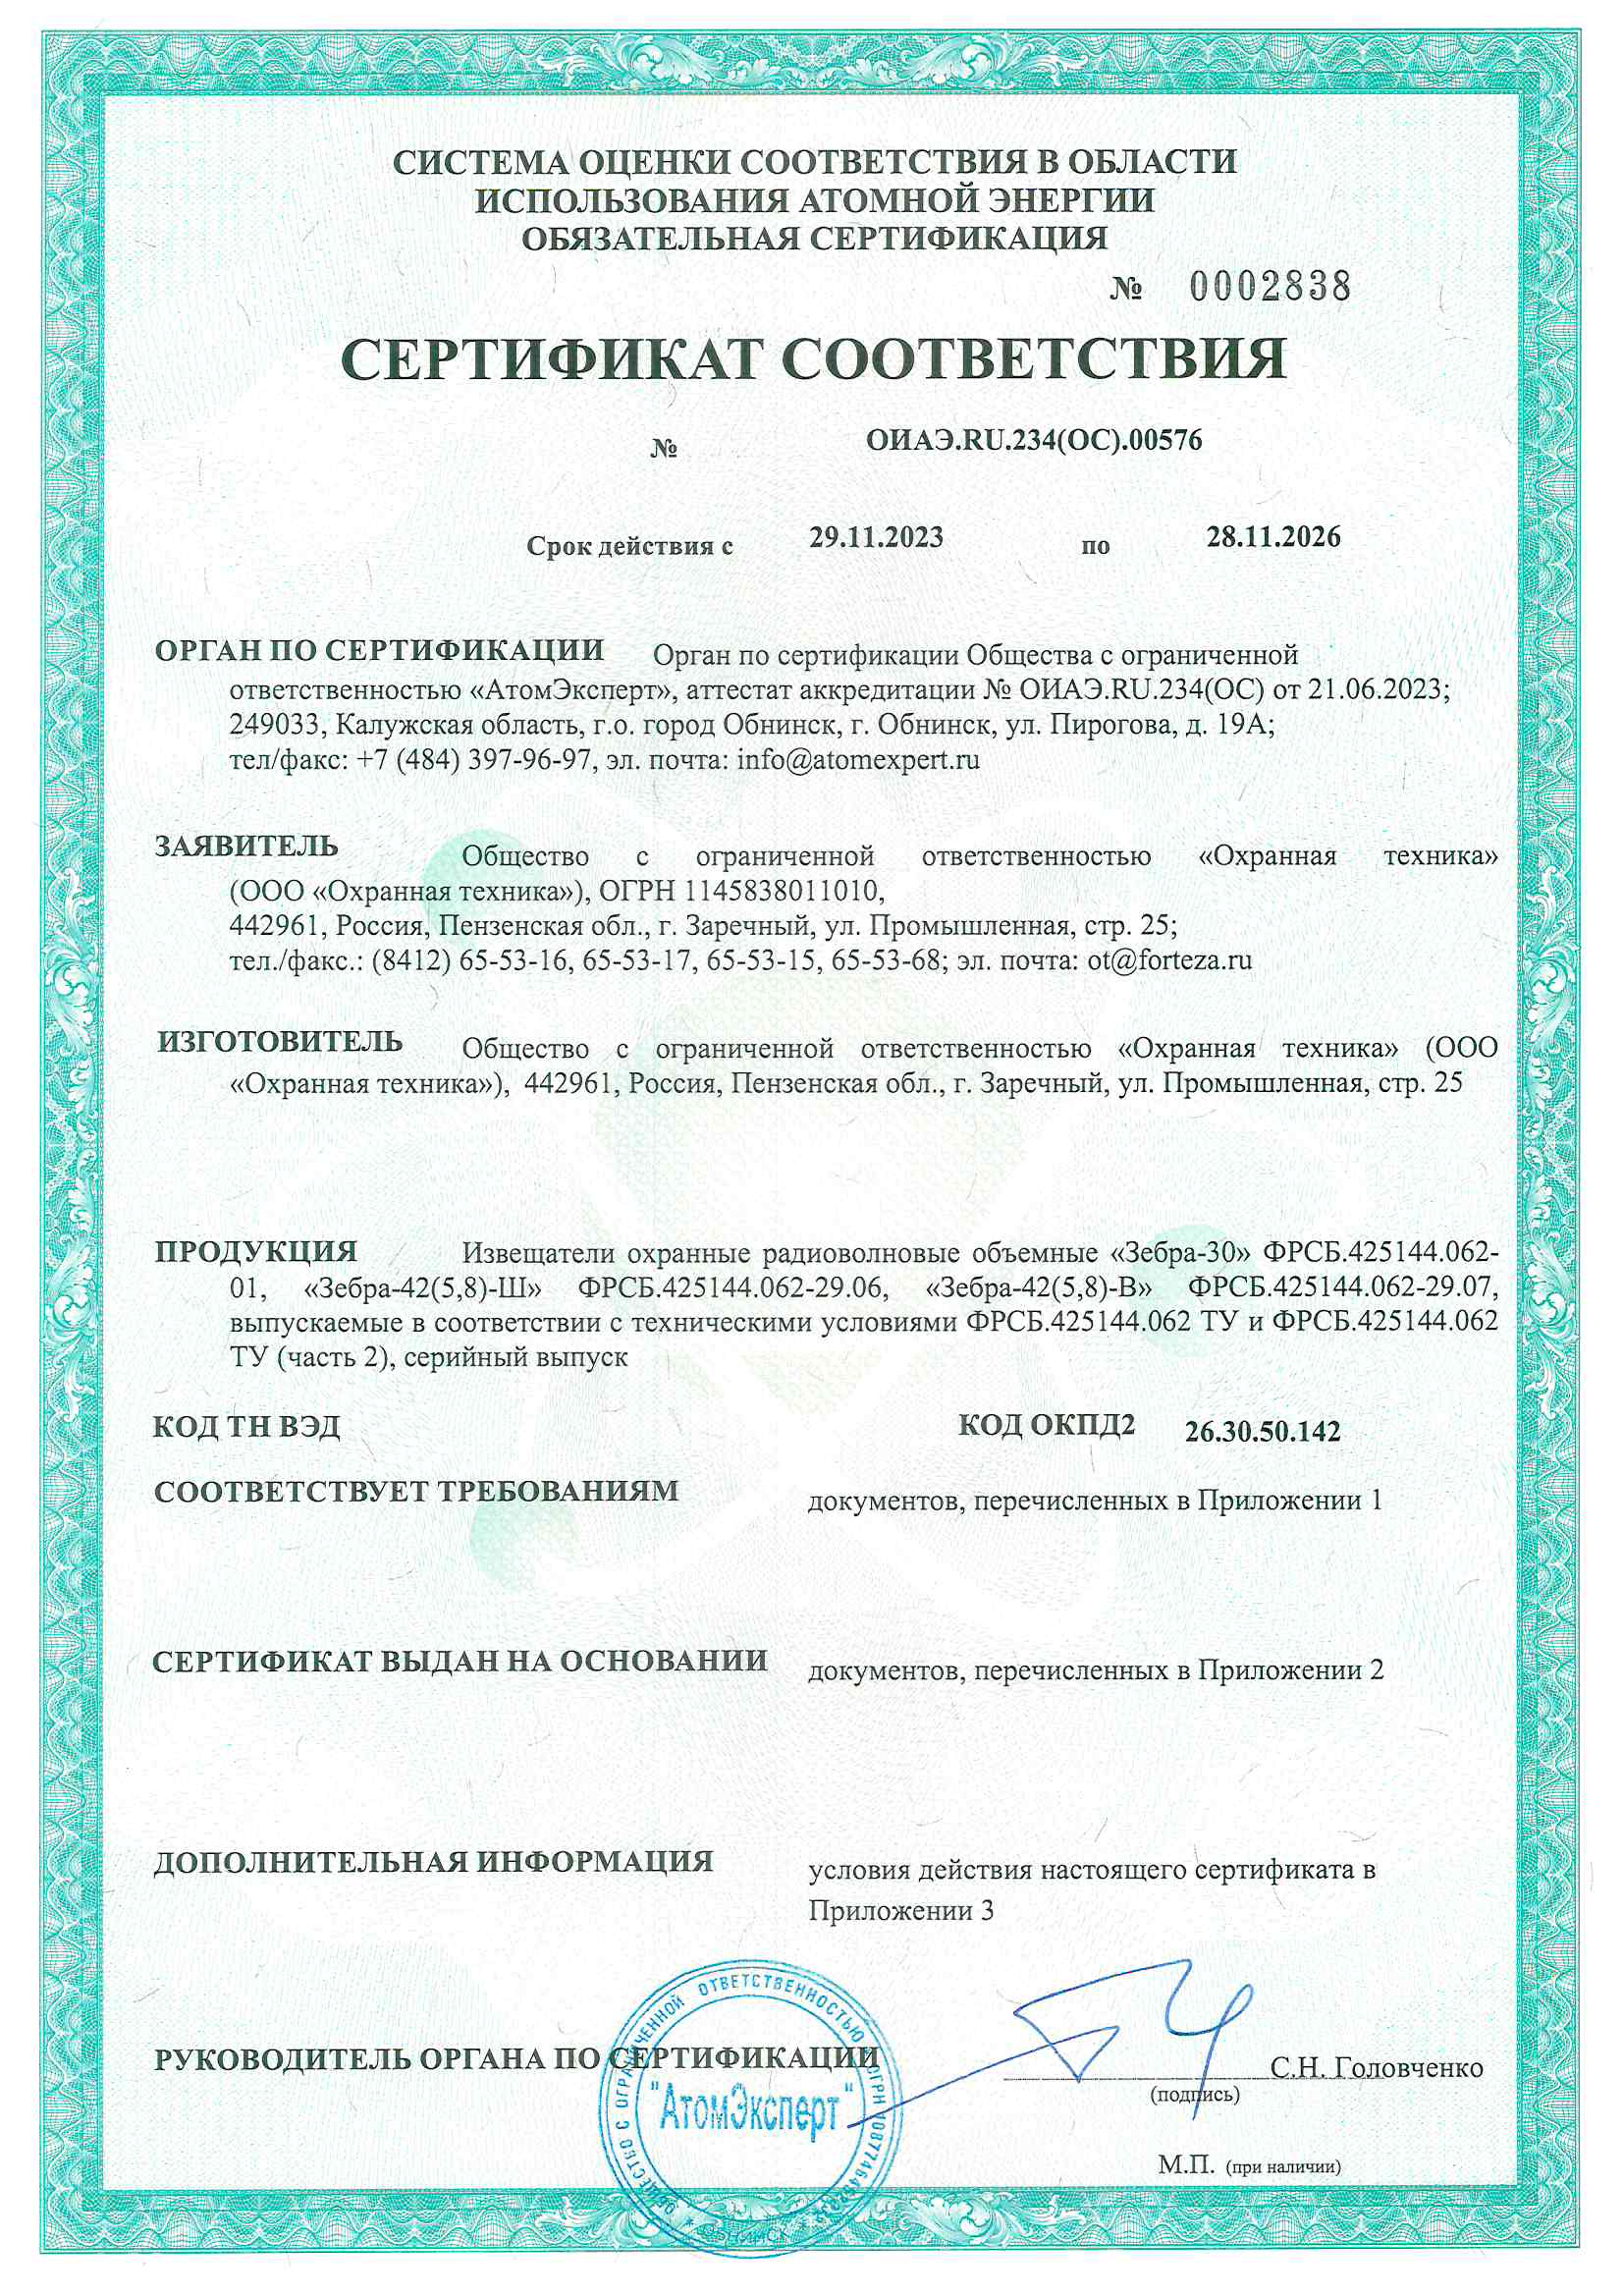 Извещатели ЗЕБРА-30 и ЗЕБРА-42(5,8)-Ш/В получили сертификат Росатома